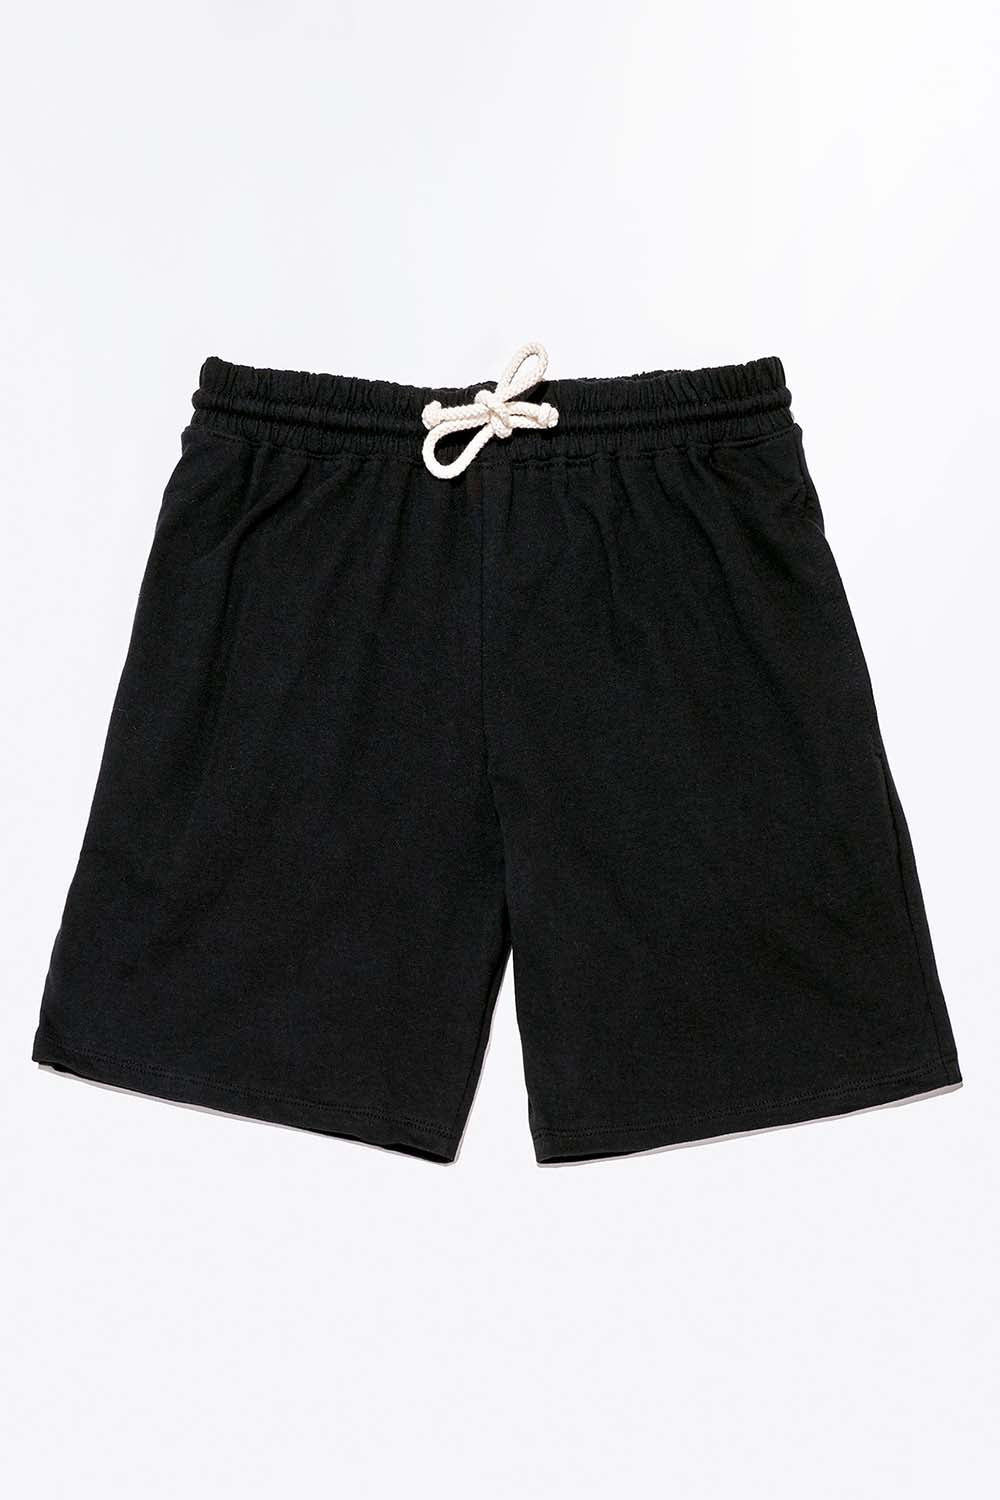 Organic Pima Cotton Cheeky Boy Shorts. Sweatshop-free. Made in